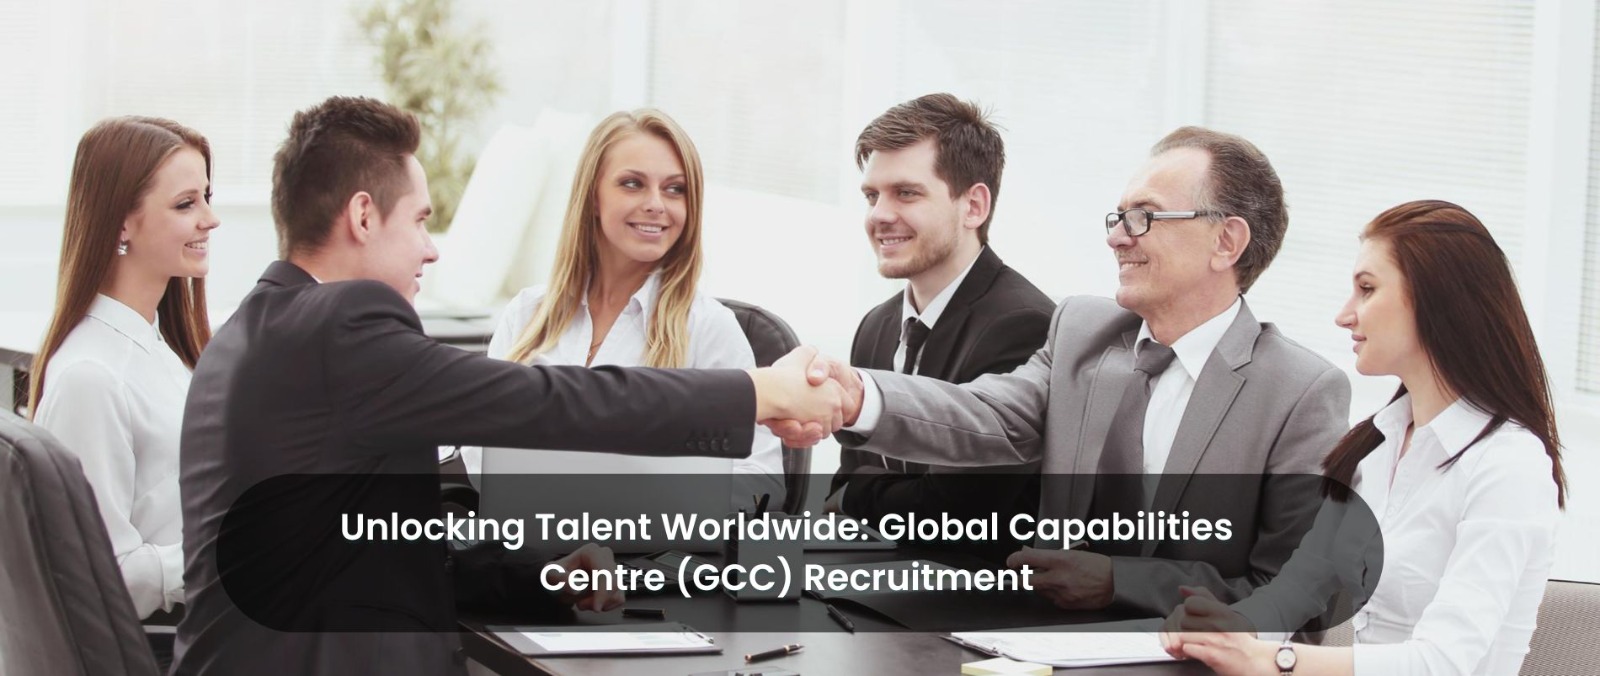 Unlocking Talent Worldwide: Global Capabilities Centre (GCC) Recruitment